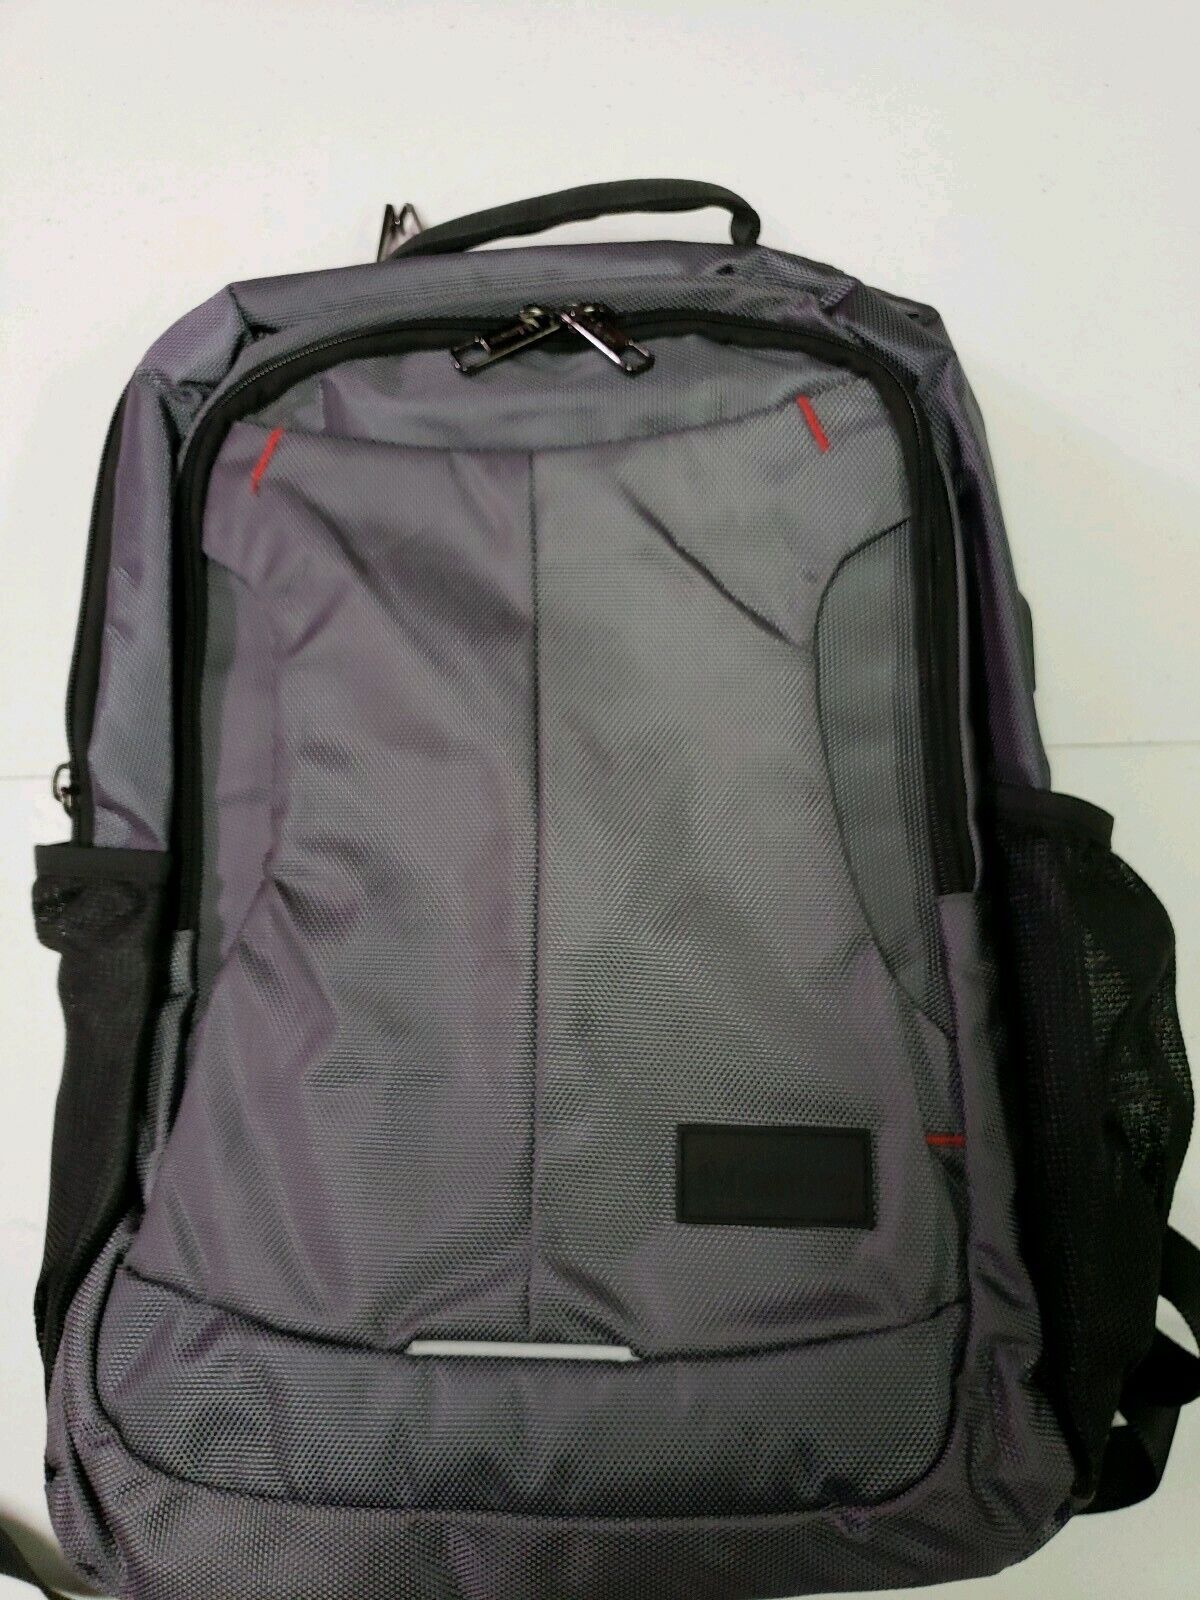 Mancro Business Laptop Backpack Slim Travel School Computer Bag Black USB